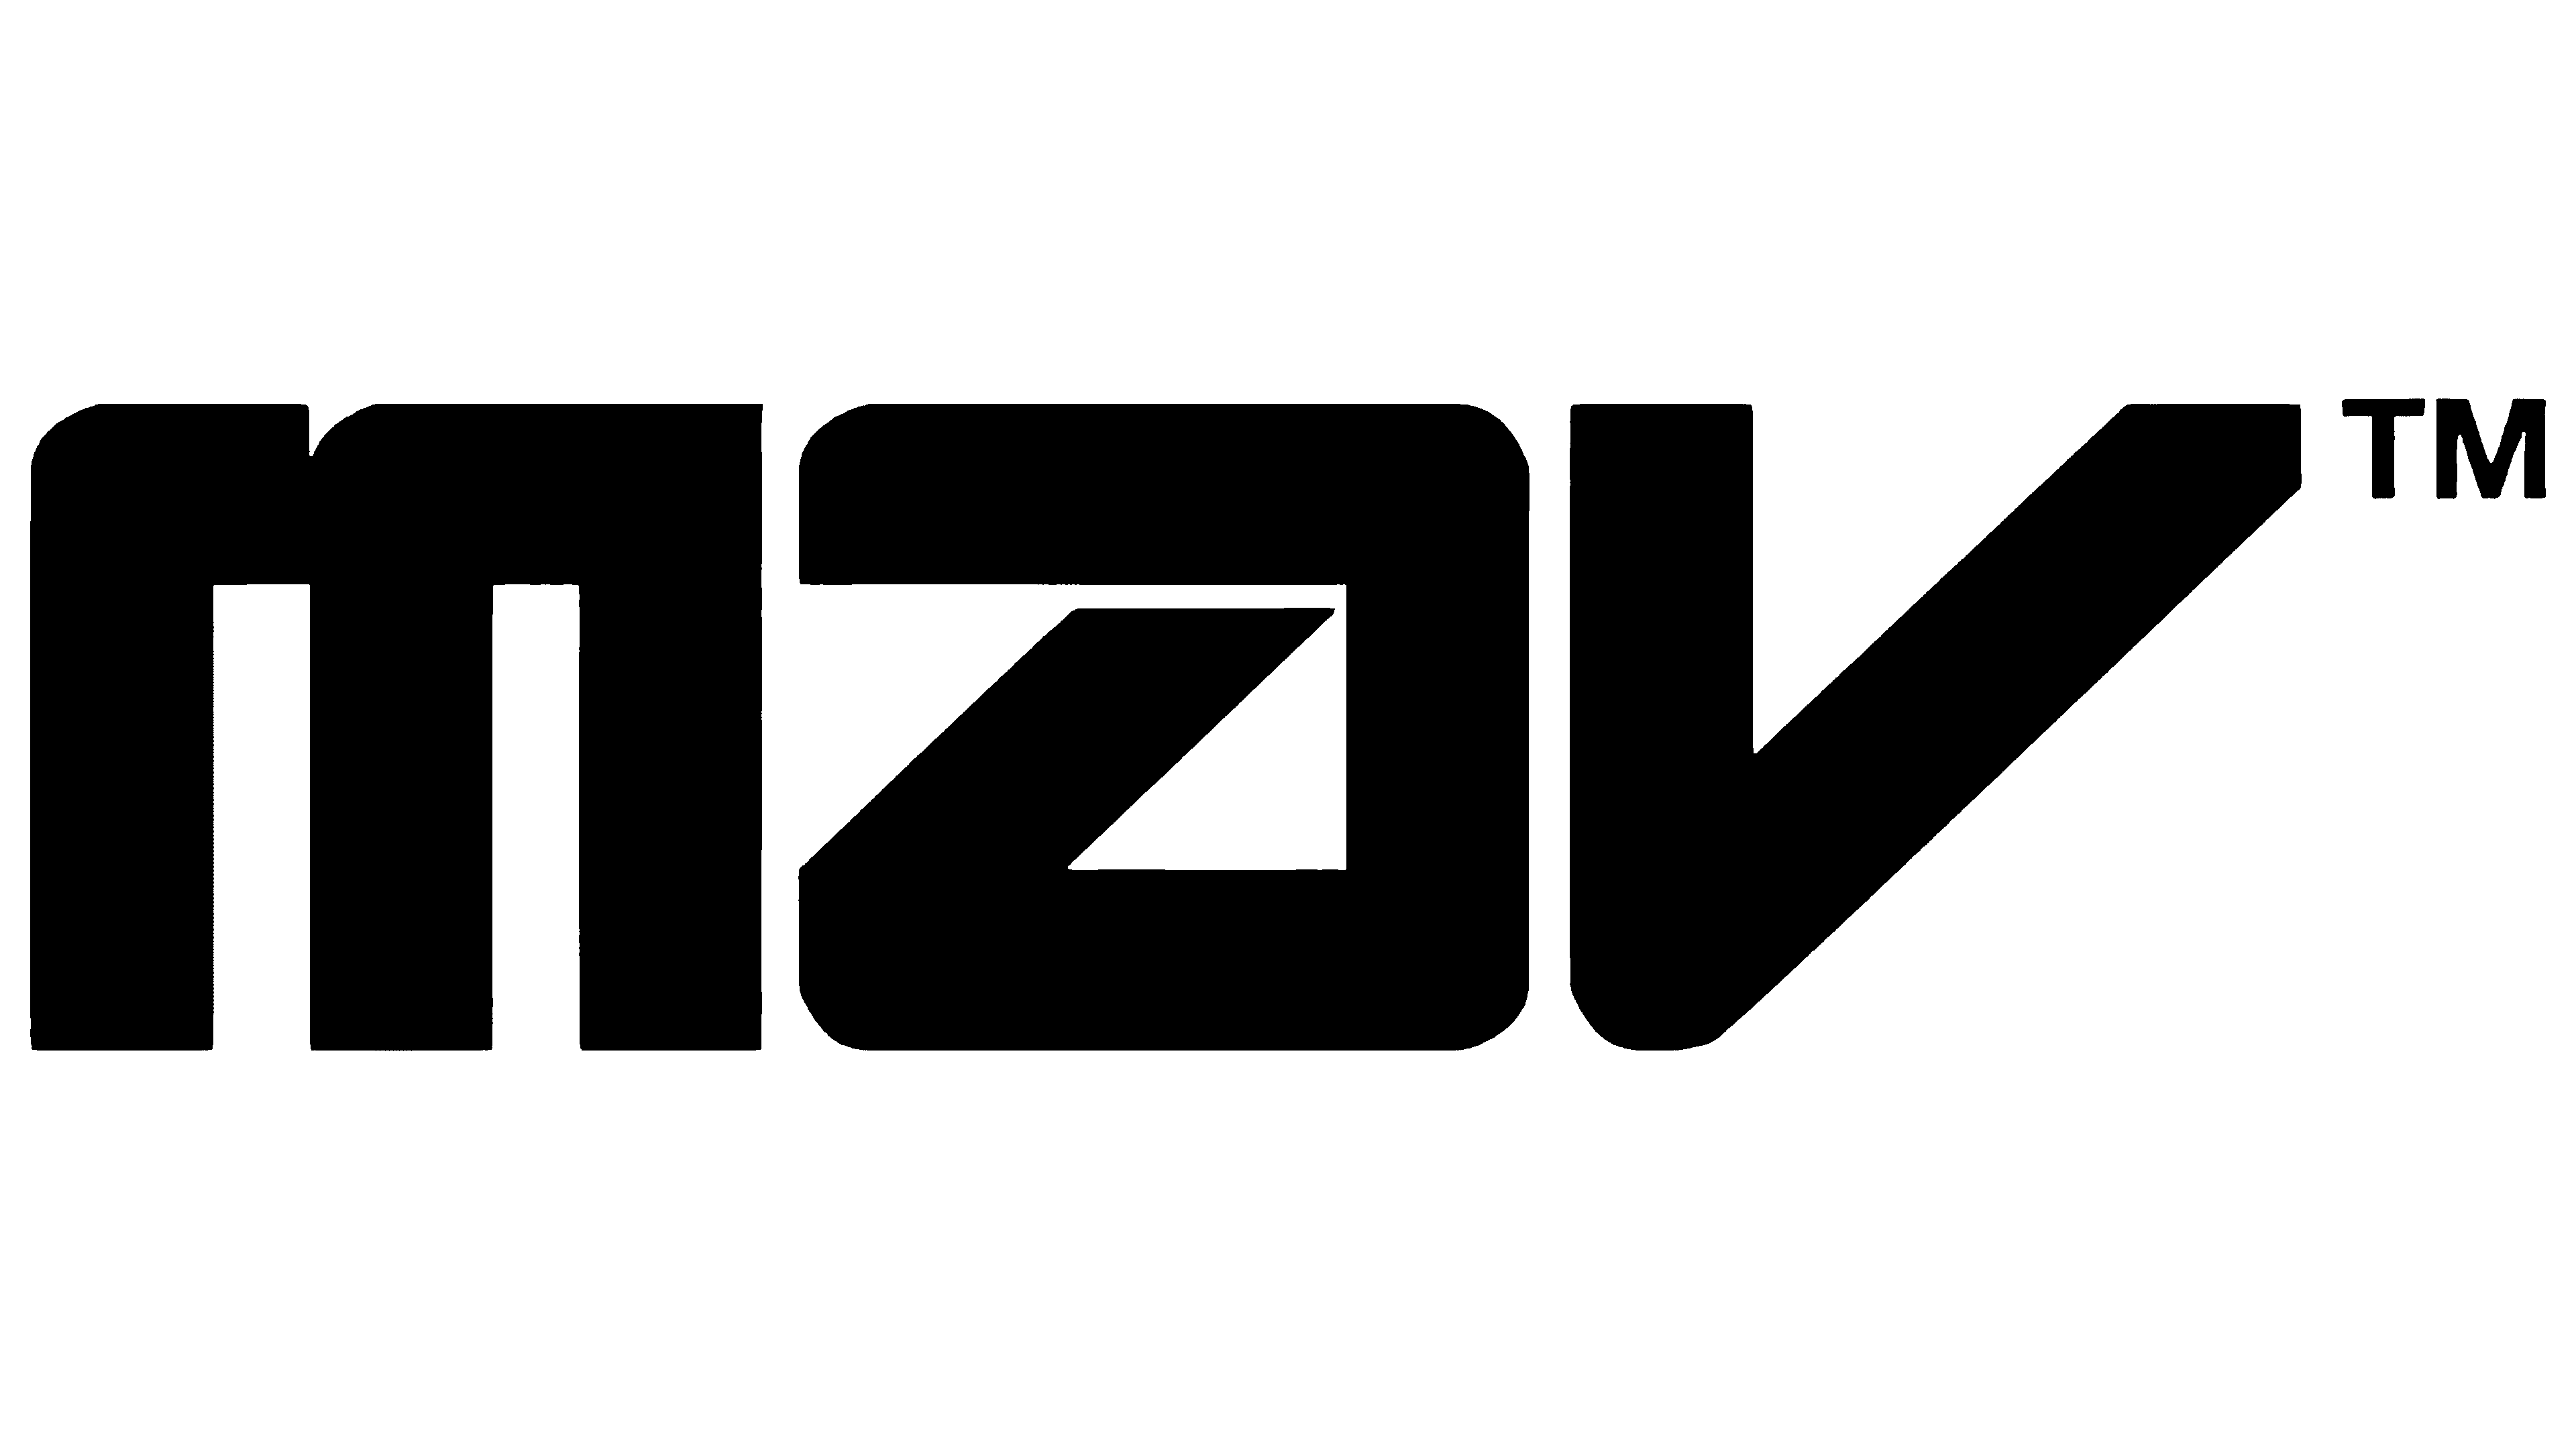 Maverick Logo PNG Transparent & SVG Vector - Freebie Supply